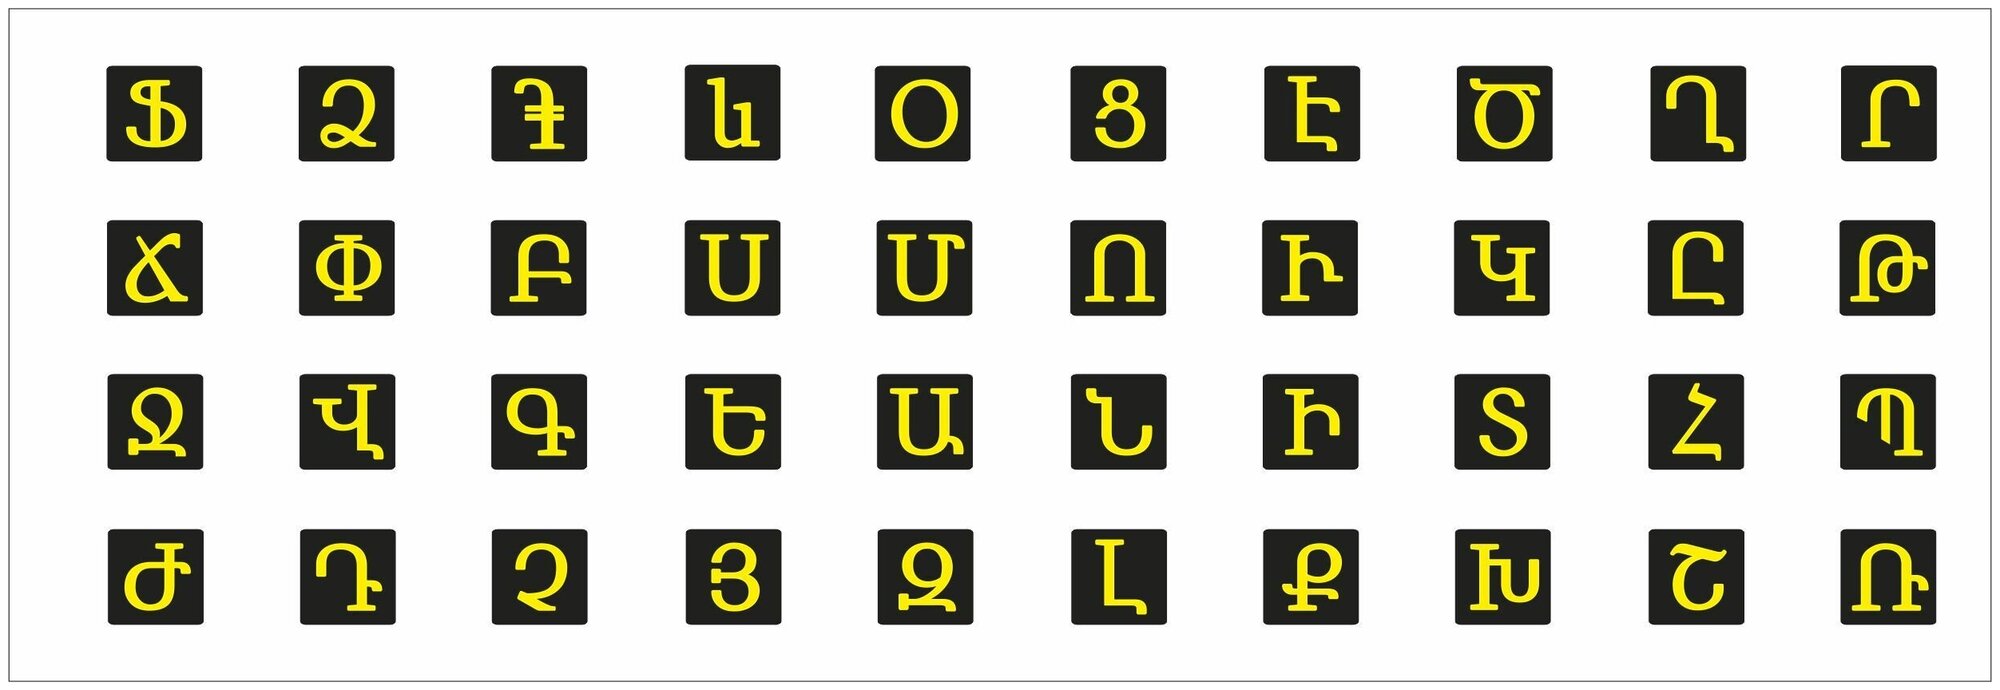 Армянские буквы набор мини наклеек на чёрном фоне 5x5 мм.